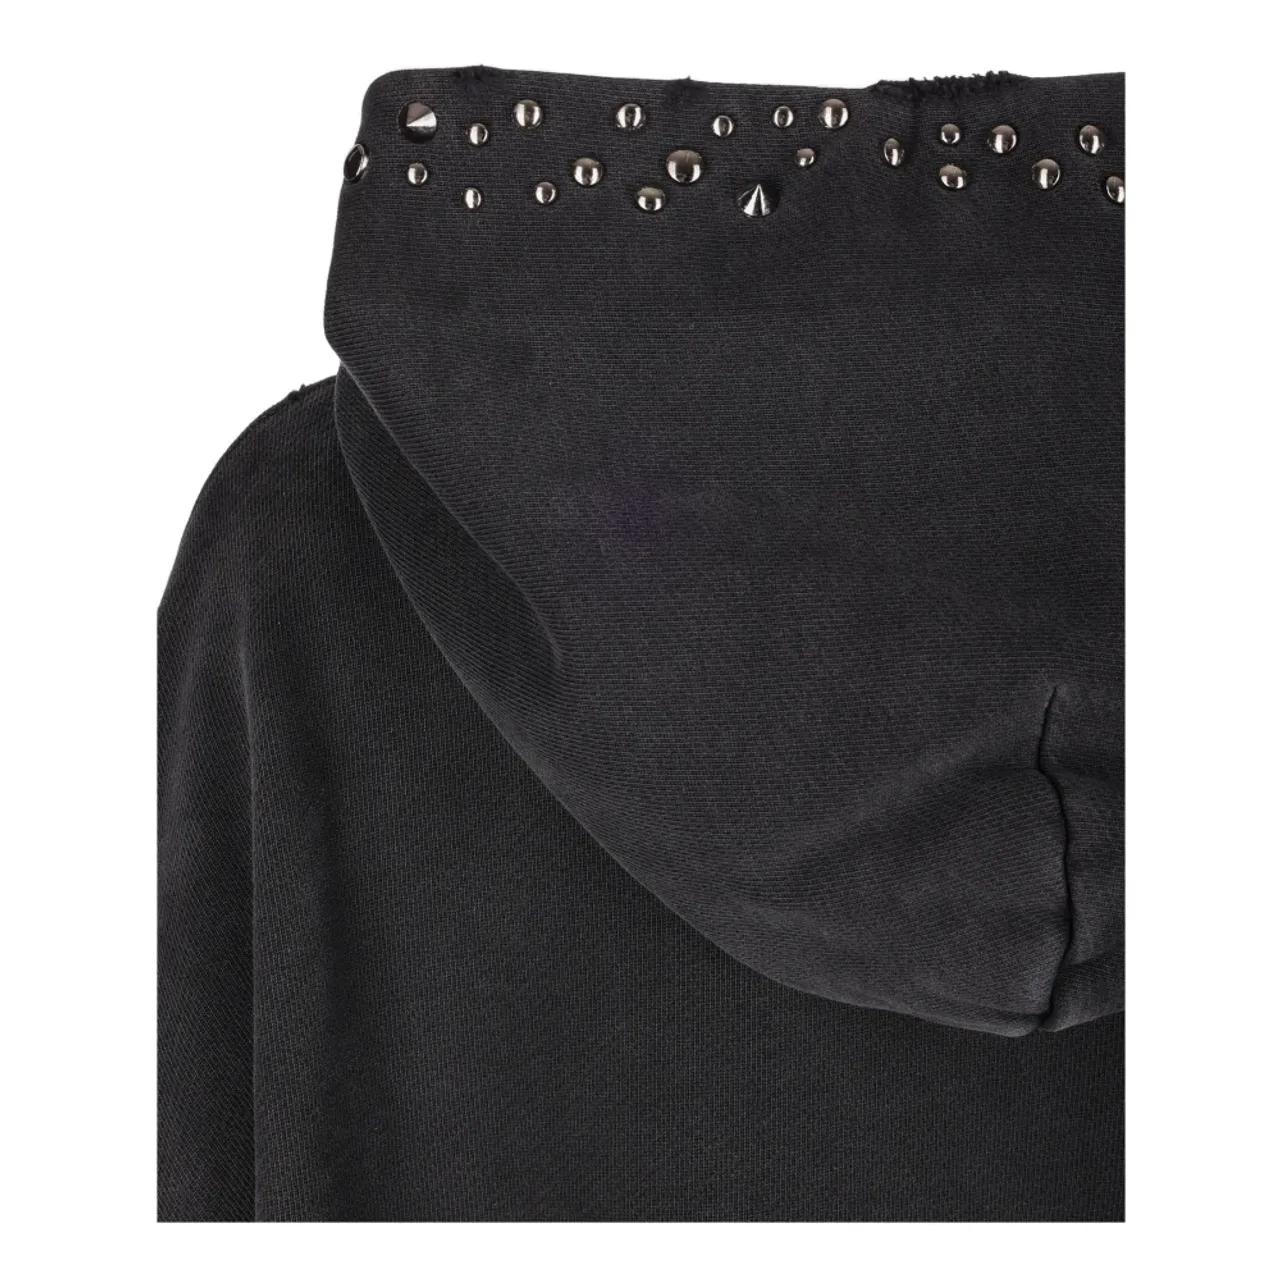 Versace , Black Studded Hooded Sweatshirt ,Black female, Sizes: